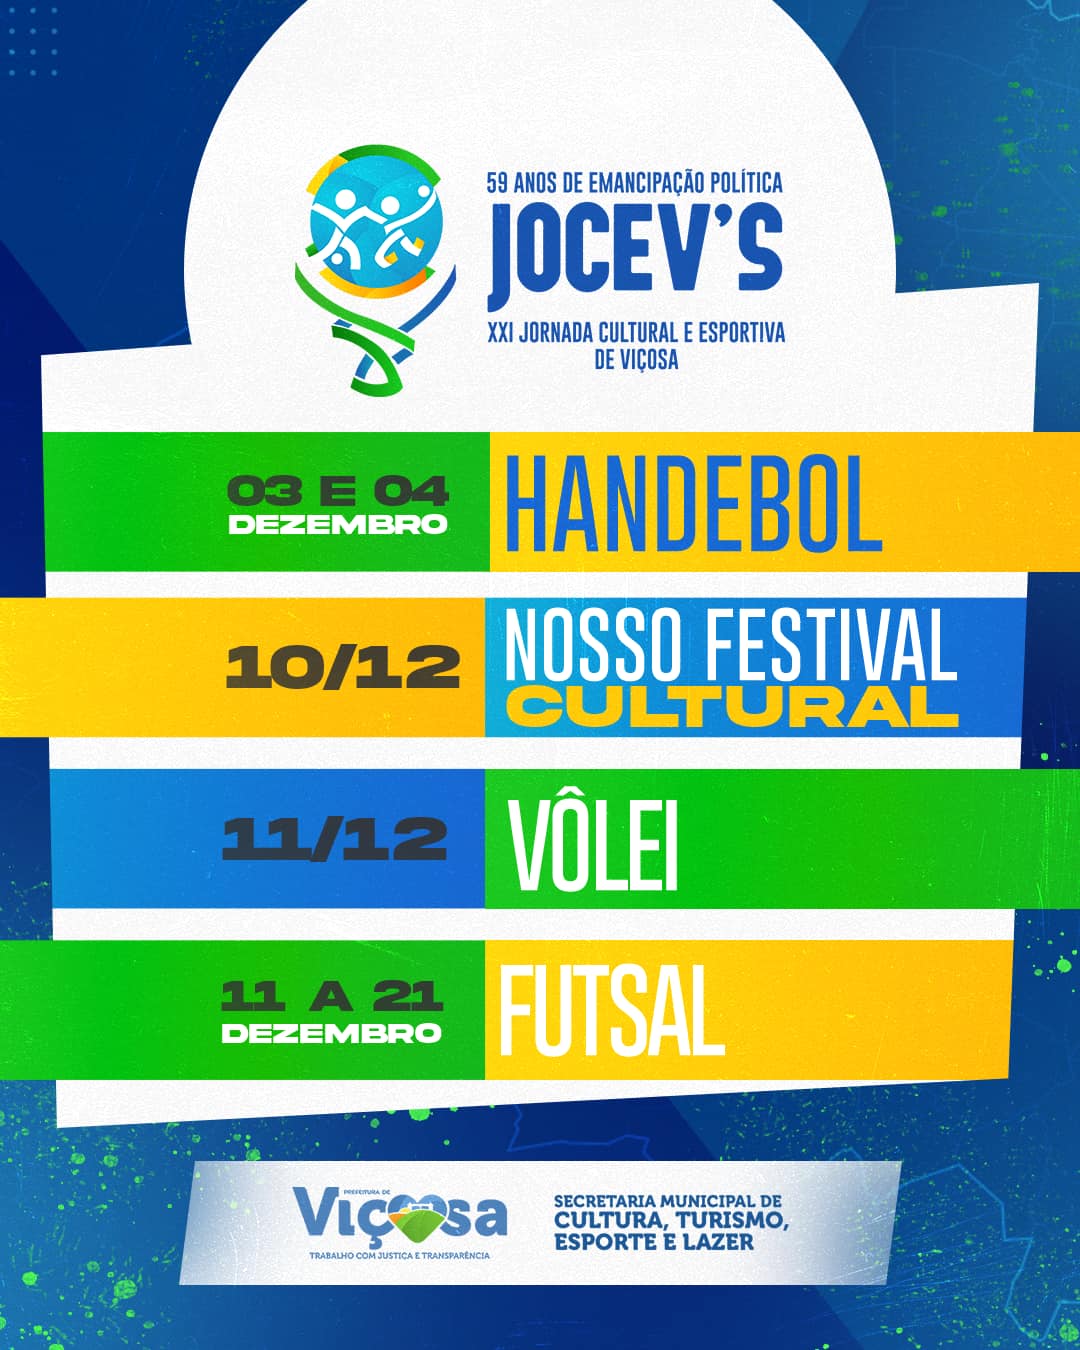 De 03 a 21 de dezembro, acontece a Tradicional Jornada Cultural e Esportiva de Viçosa – Jocev’s 2022.